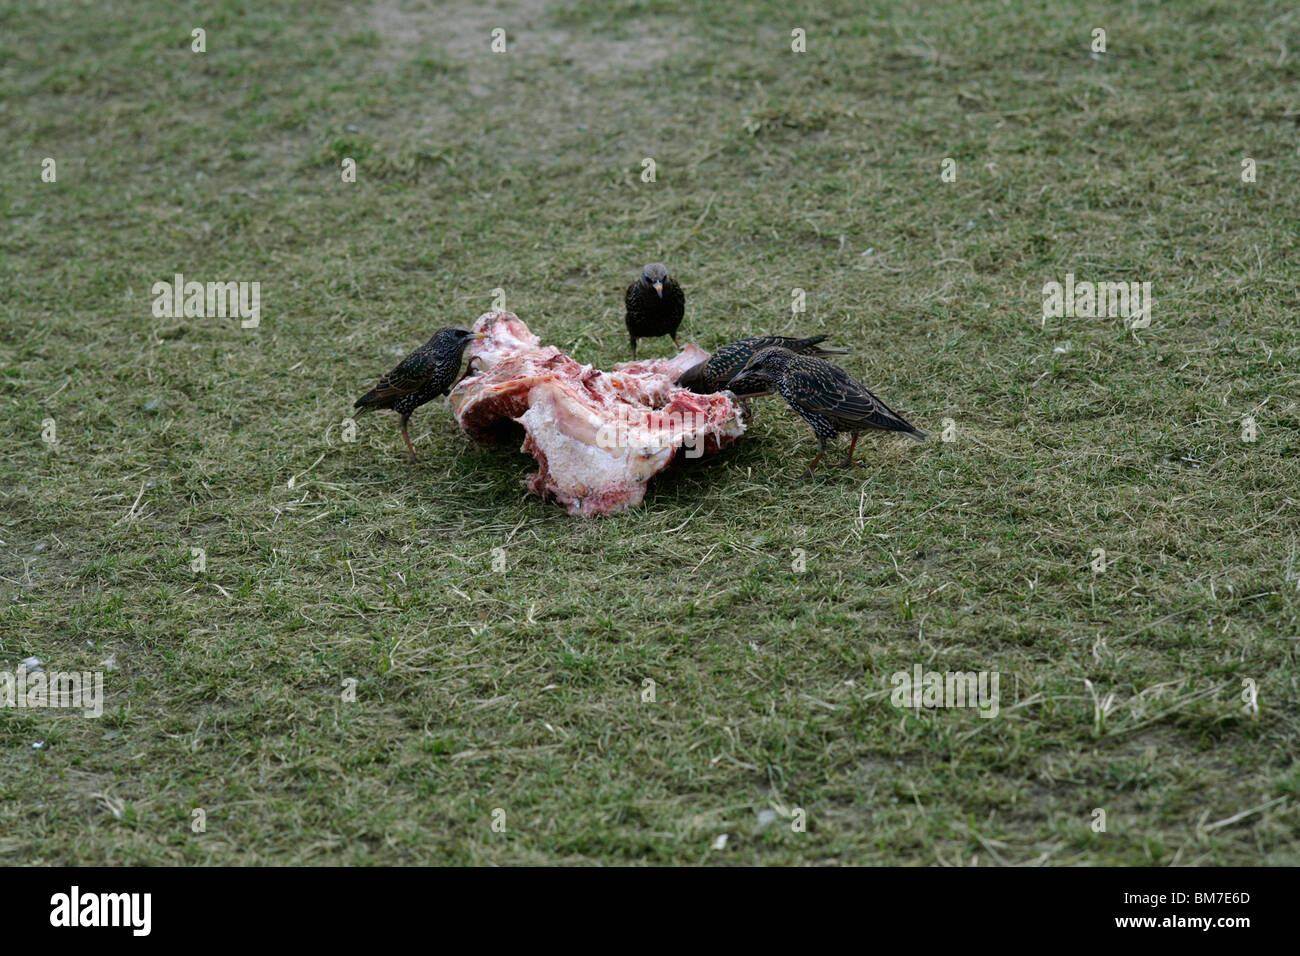 Uccelli scavenger di mangiare una carcassa Foto Stock